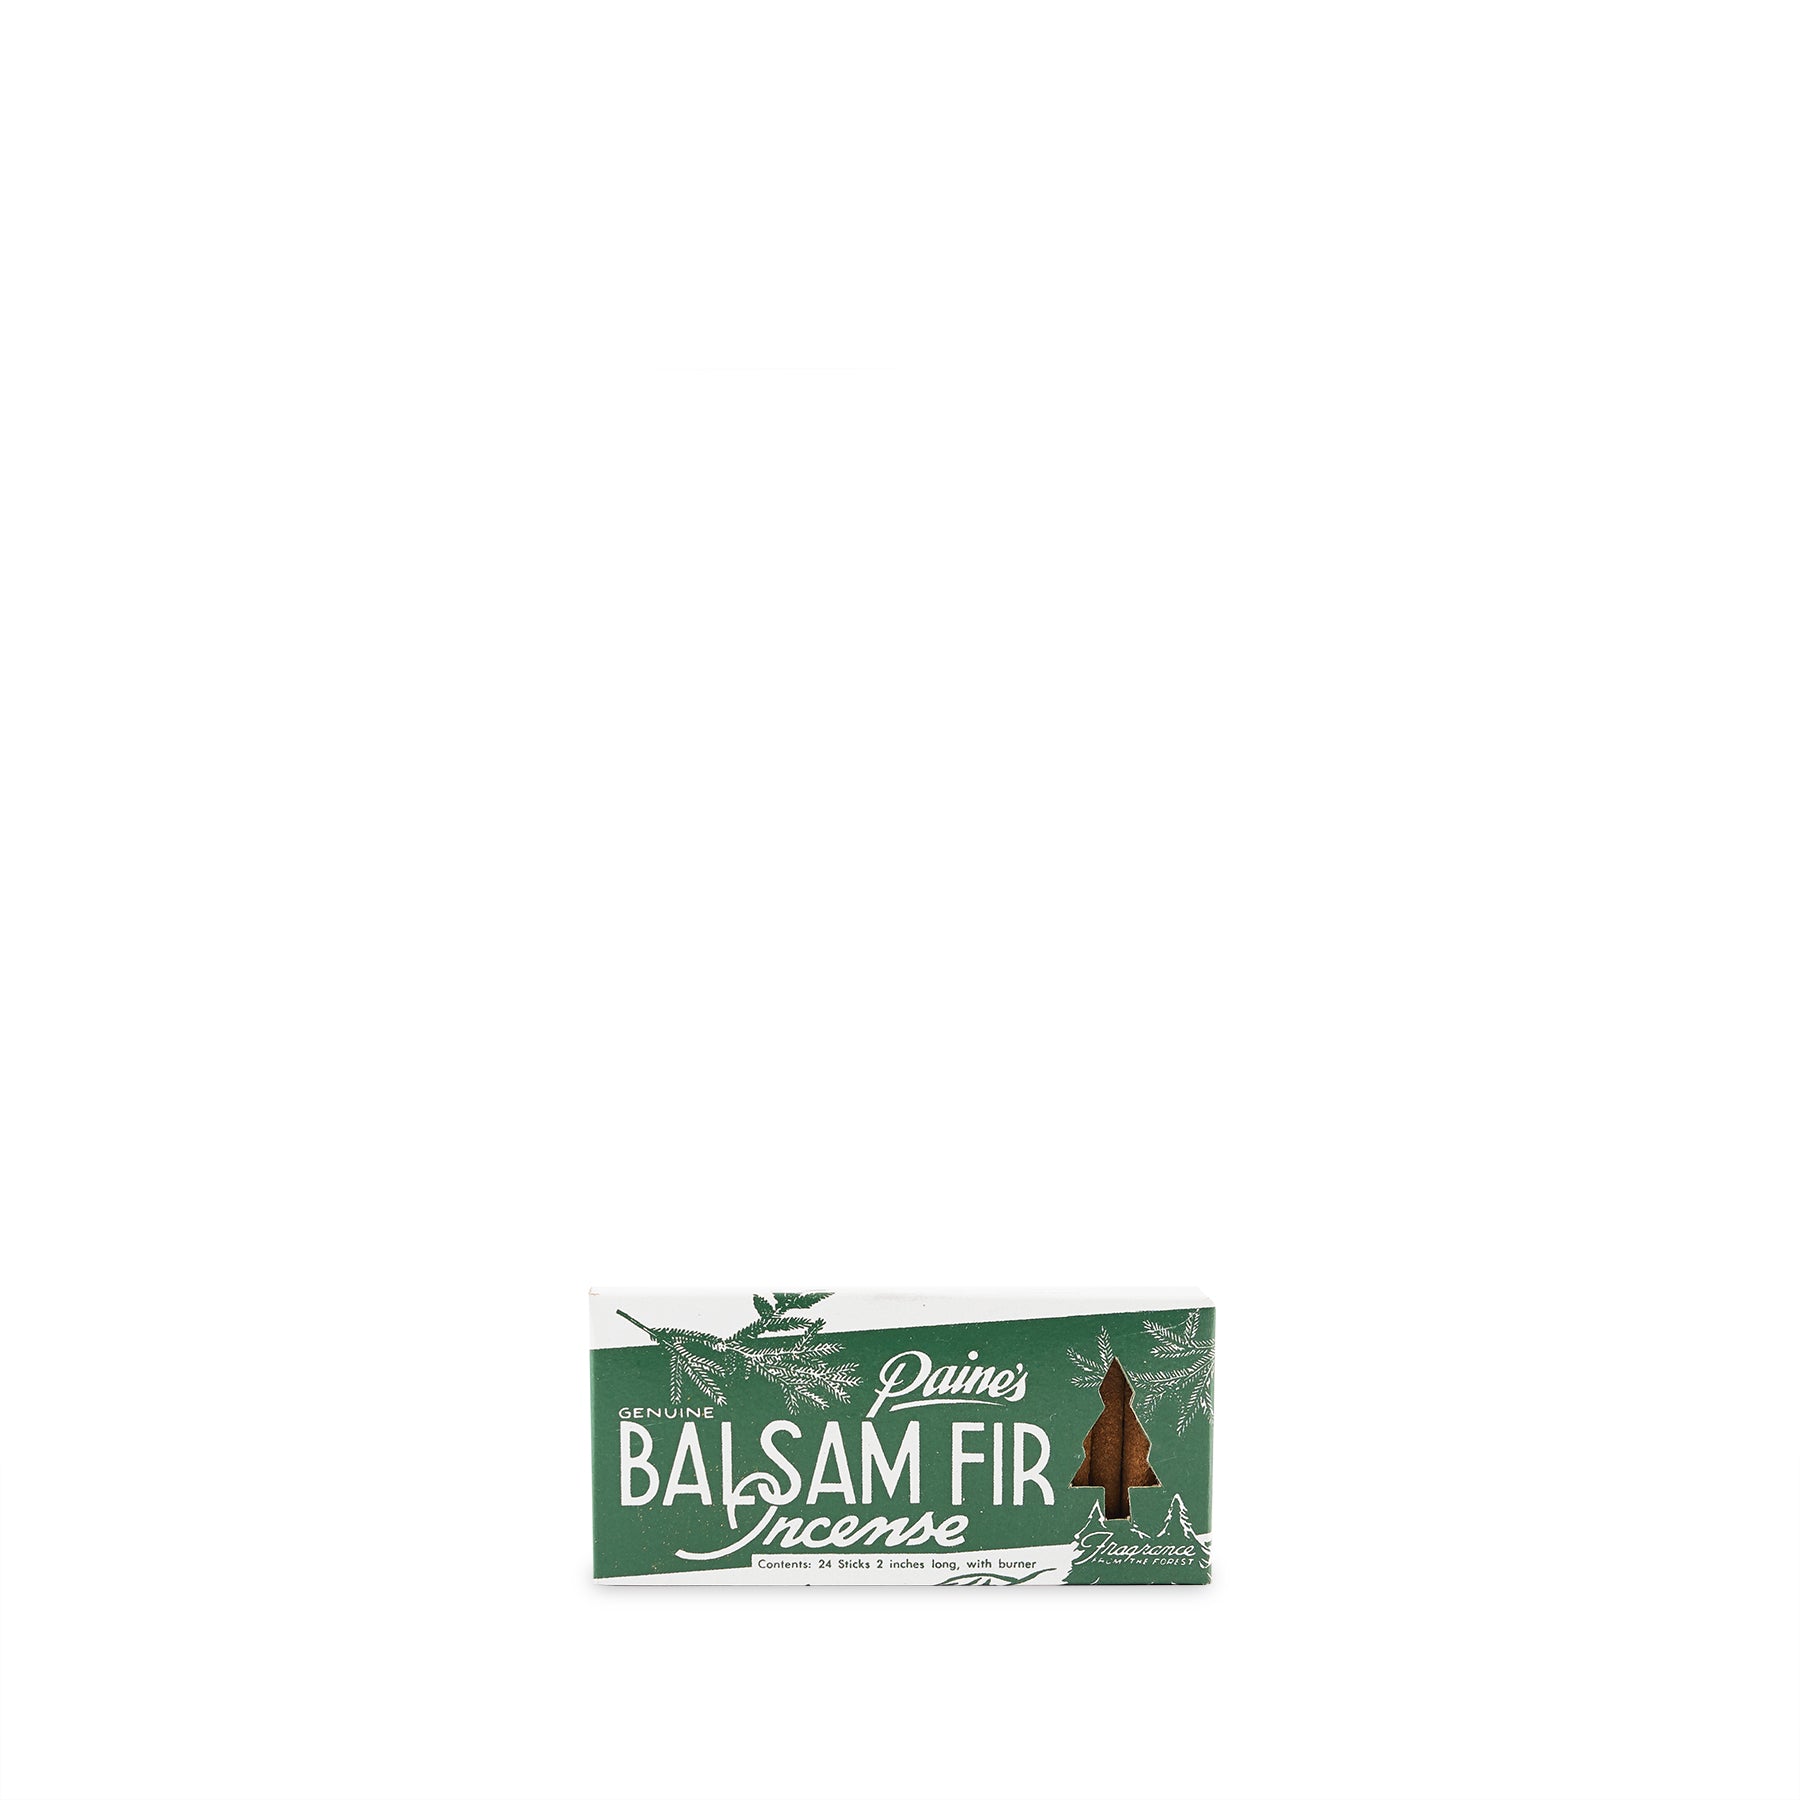 Balsam Fir Stick Incense (Box of 24) Zoom Image 1